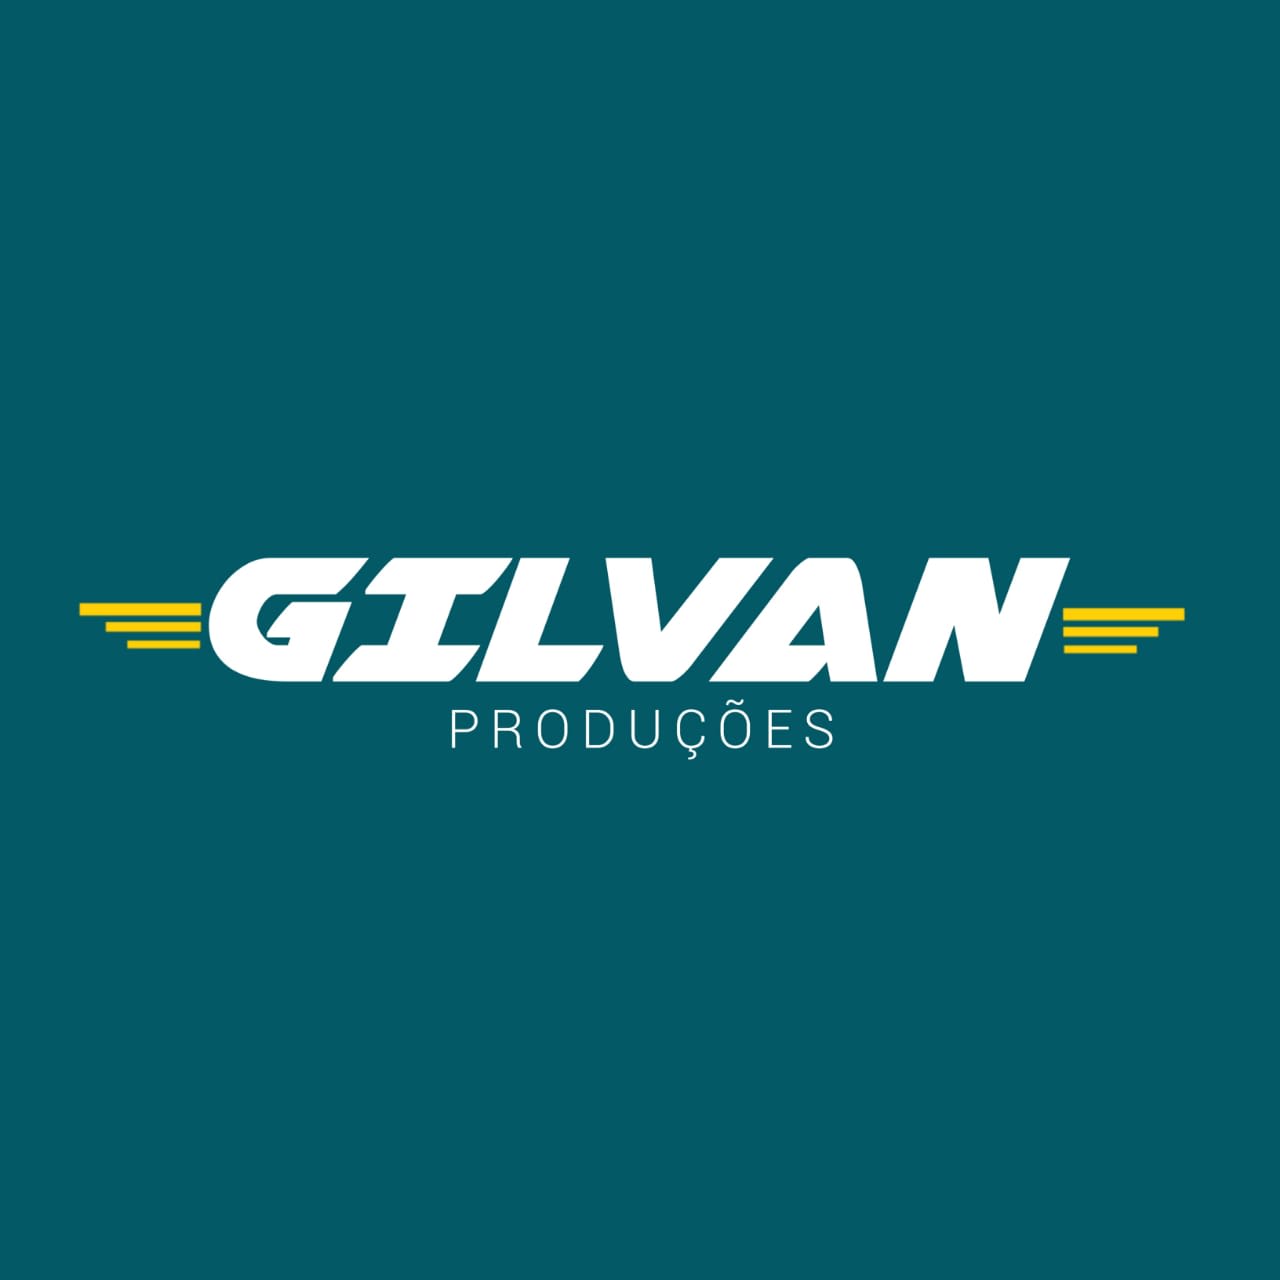 Gilvan Produções